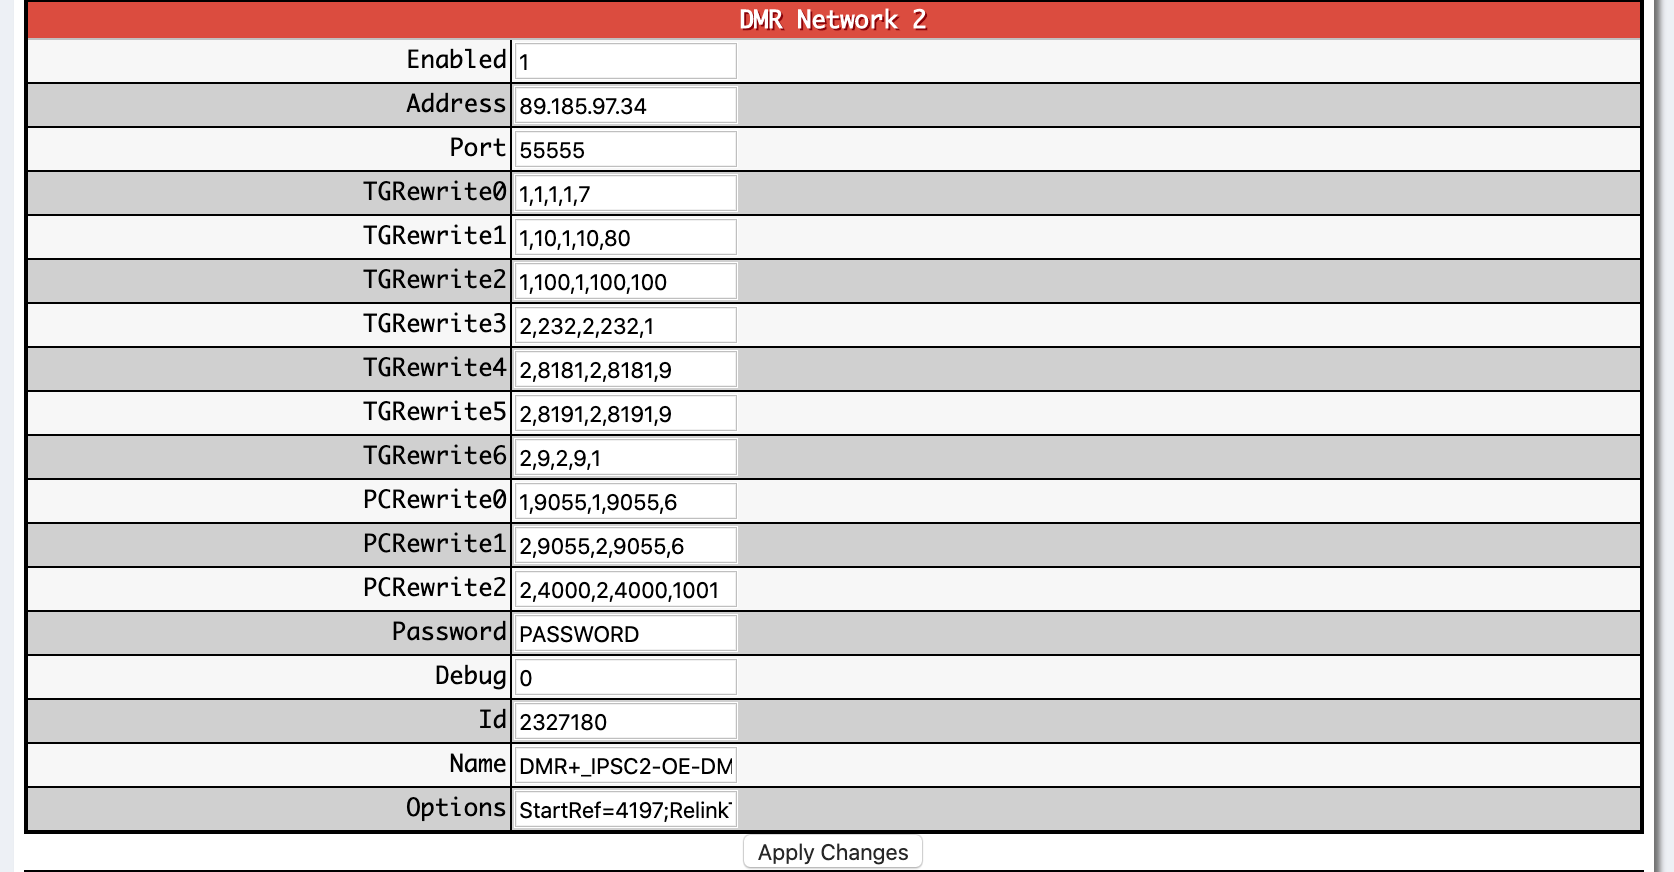 DMR Network 2 configuration